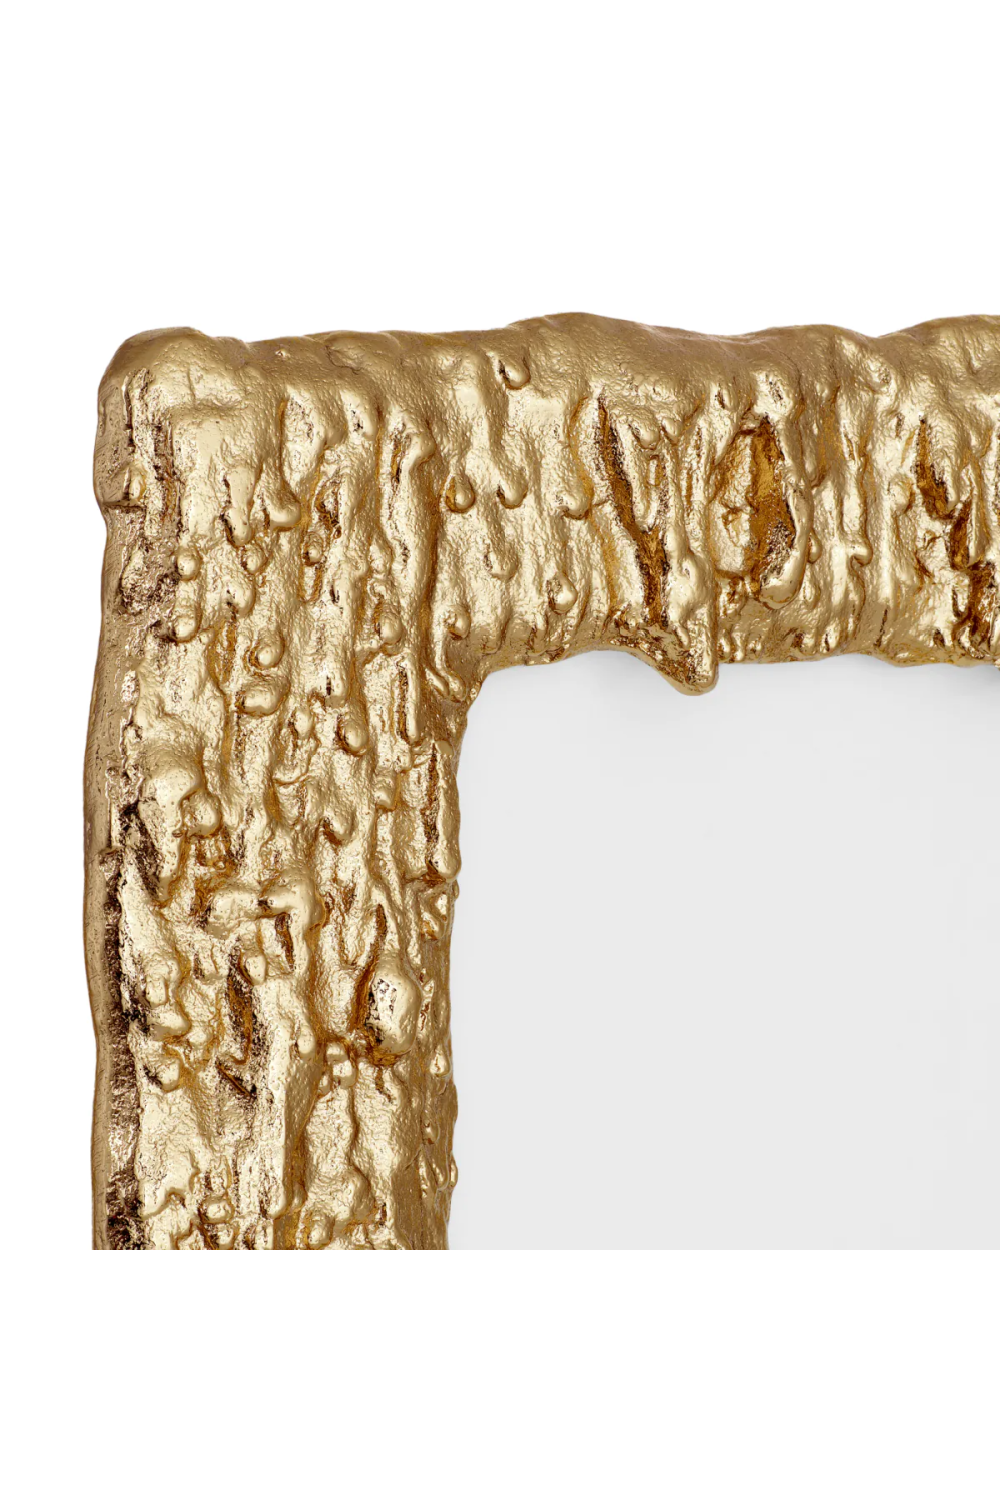 Gold Textured Picture Frame | Eichholtz Cotati | Oroa.com